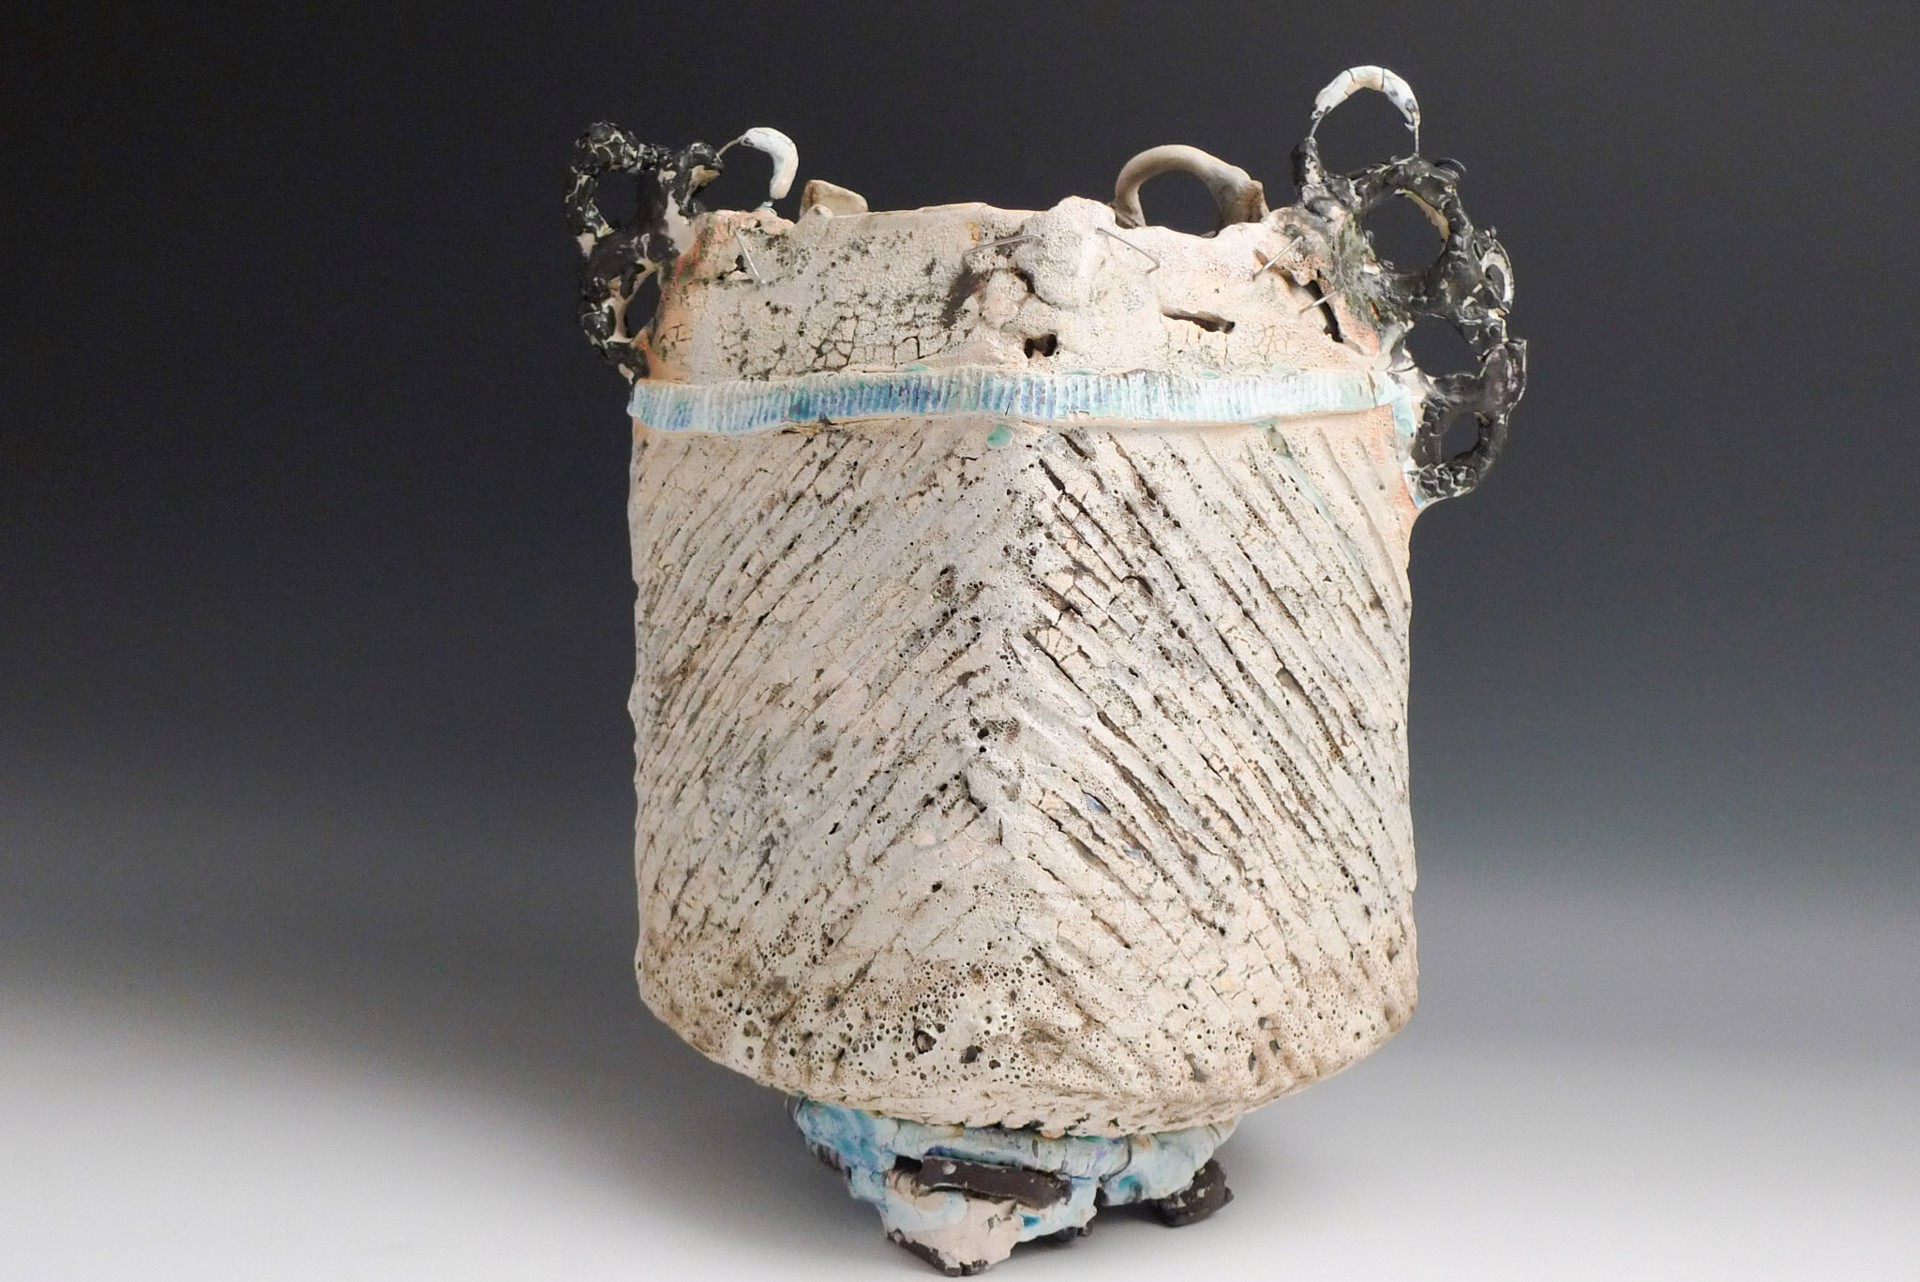 Box Vessel with Kiln Coil by Ani Kasten